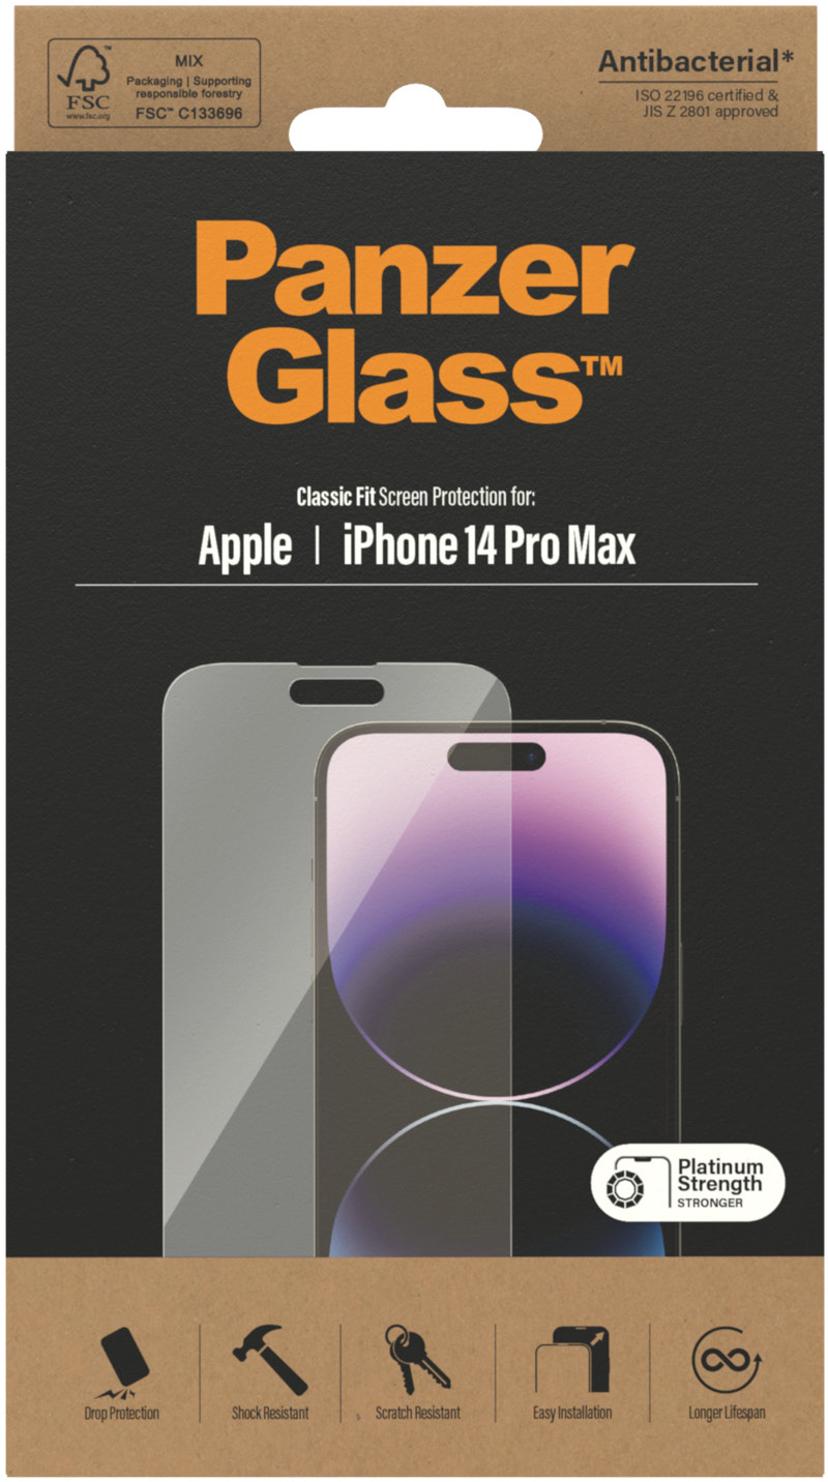 Panzerglass Classic Fit iPhone 14 Pro Max